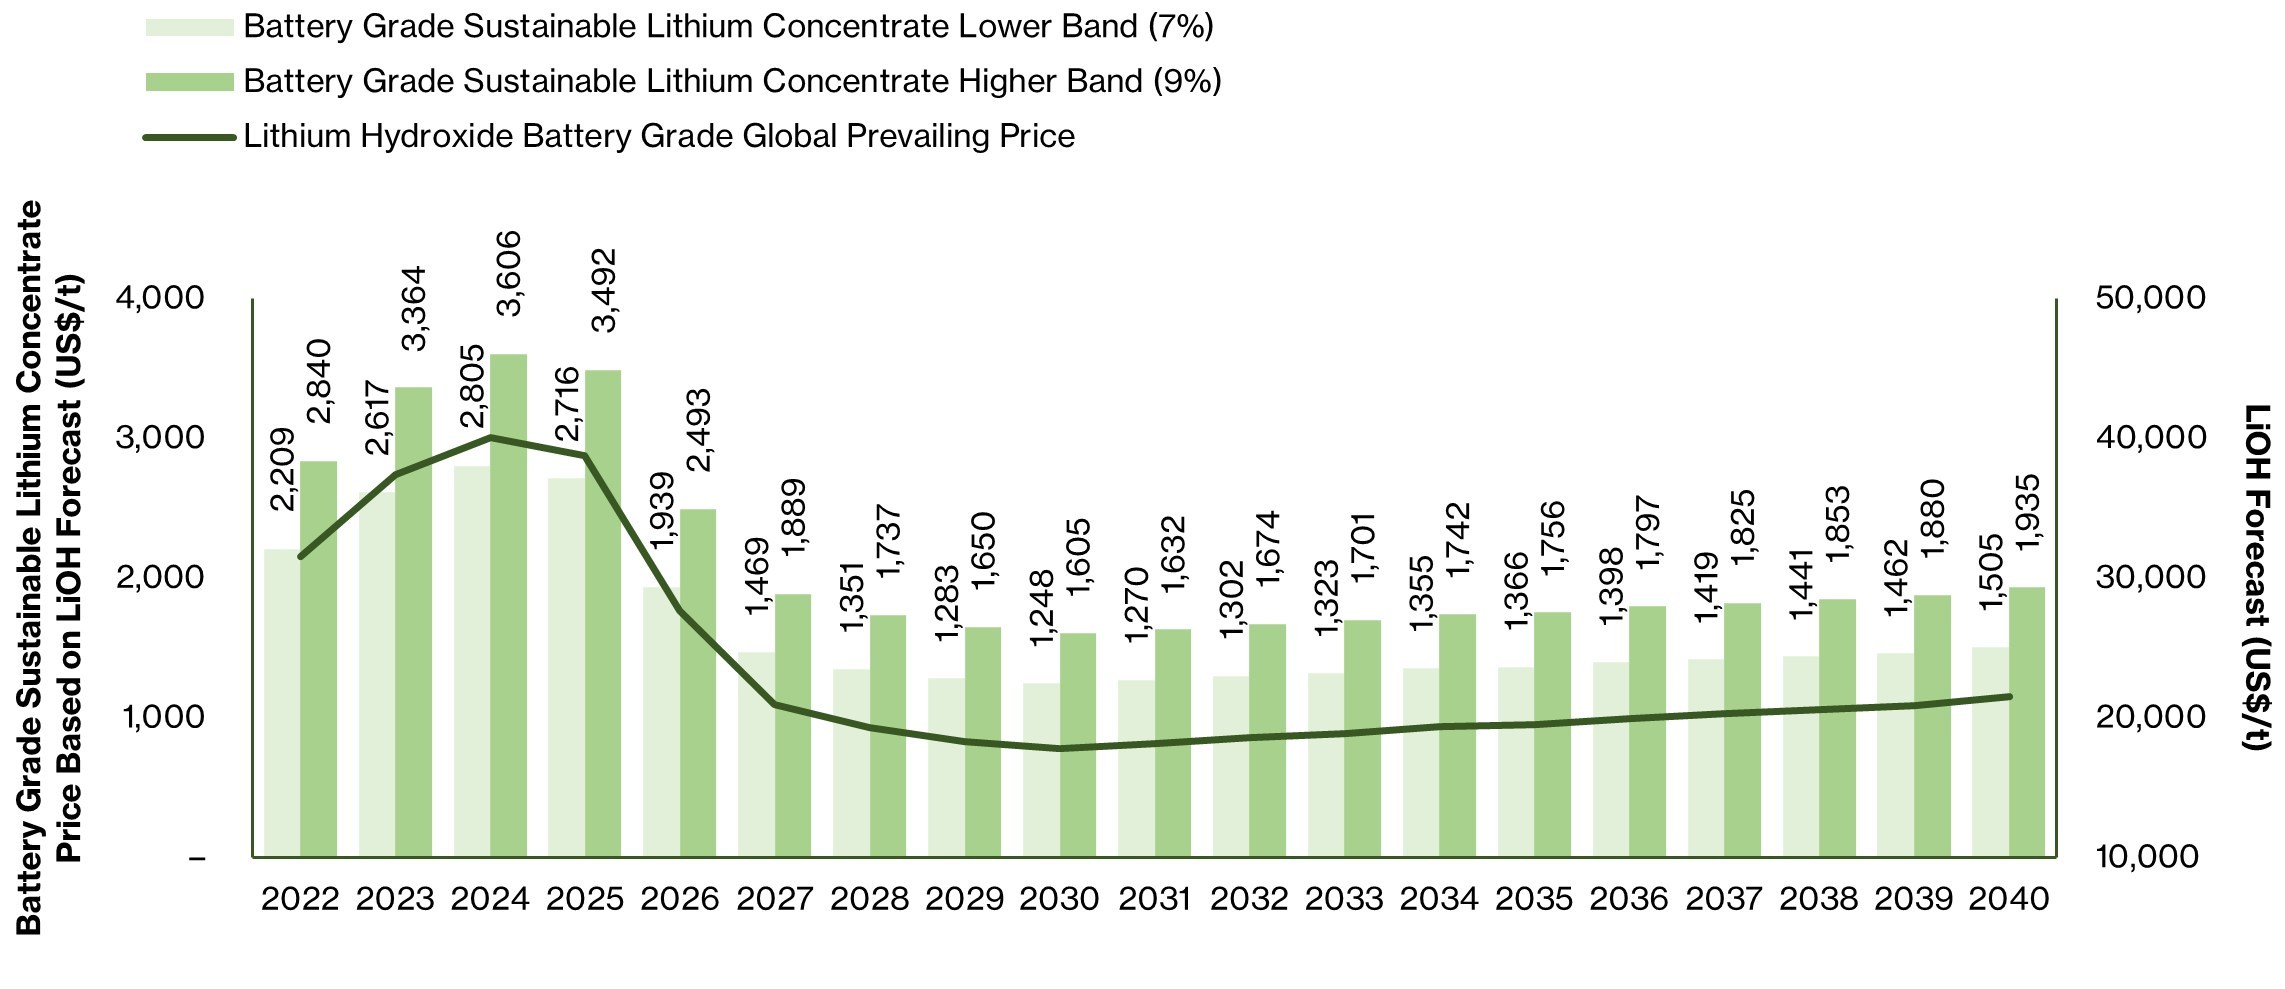 Figure 2: Battery Grade LiOH & SC6 Price Forecast (US$/t)